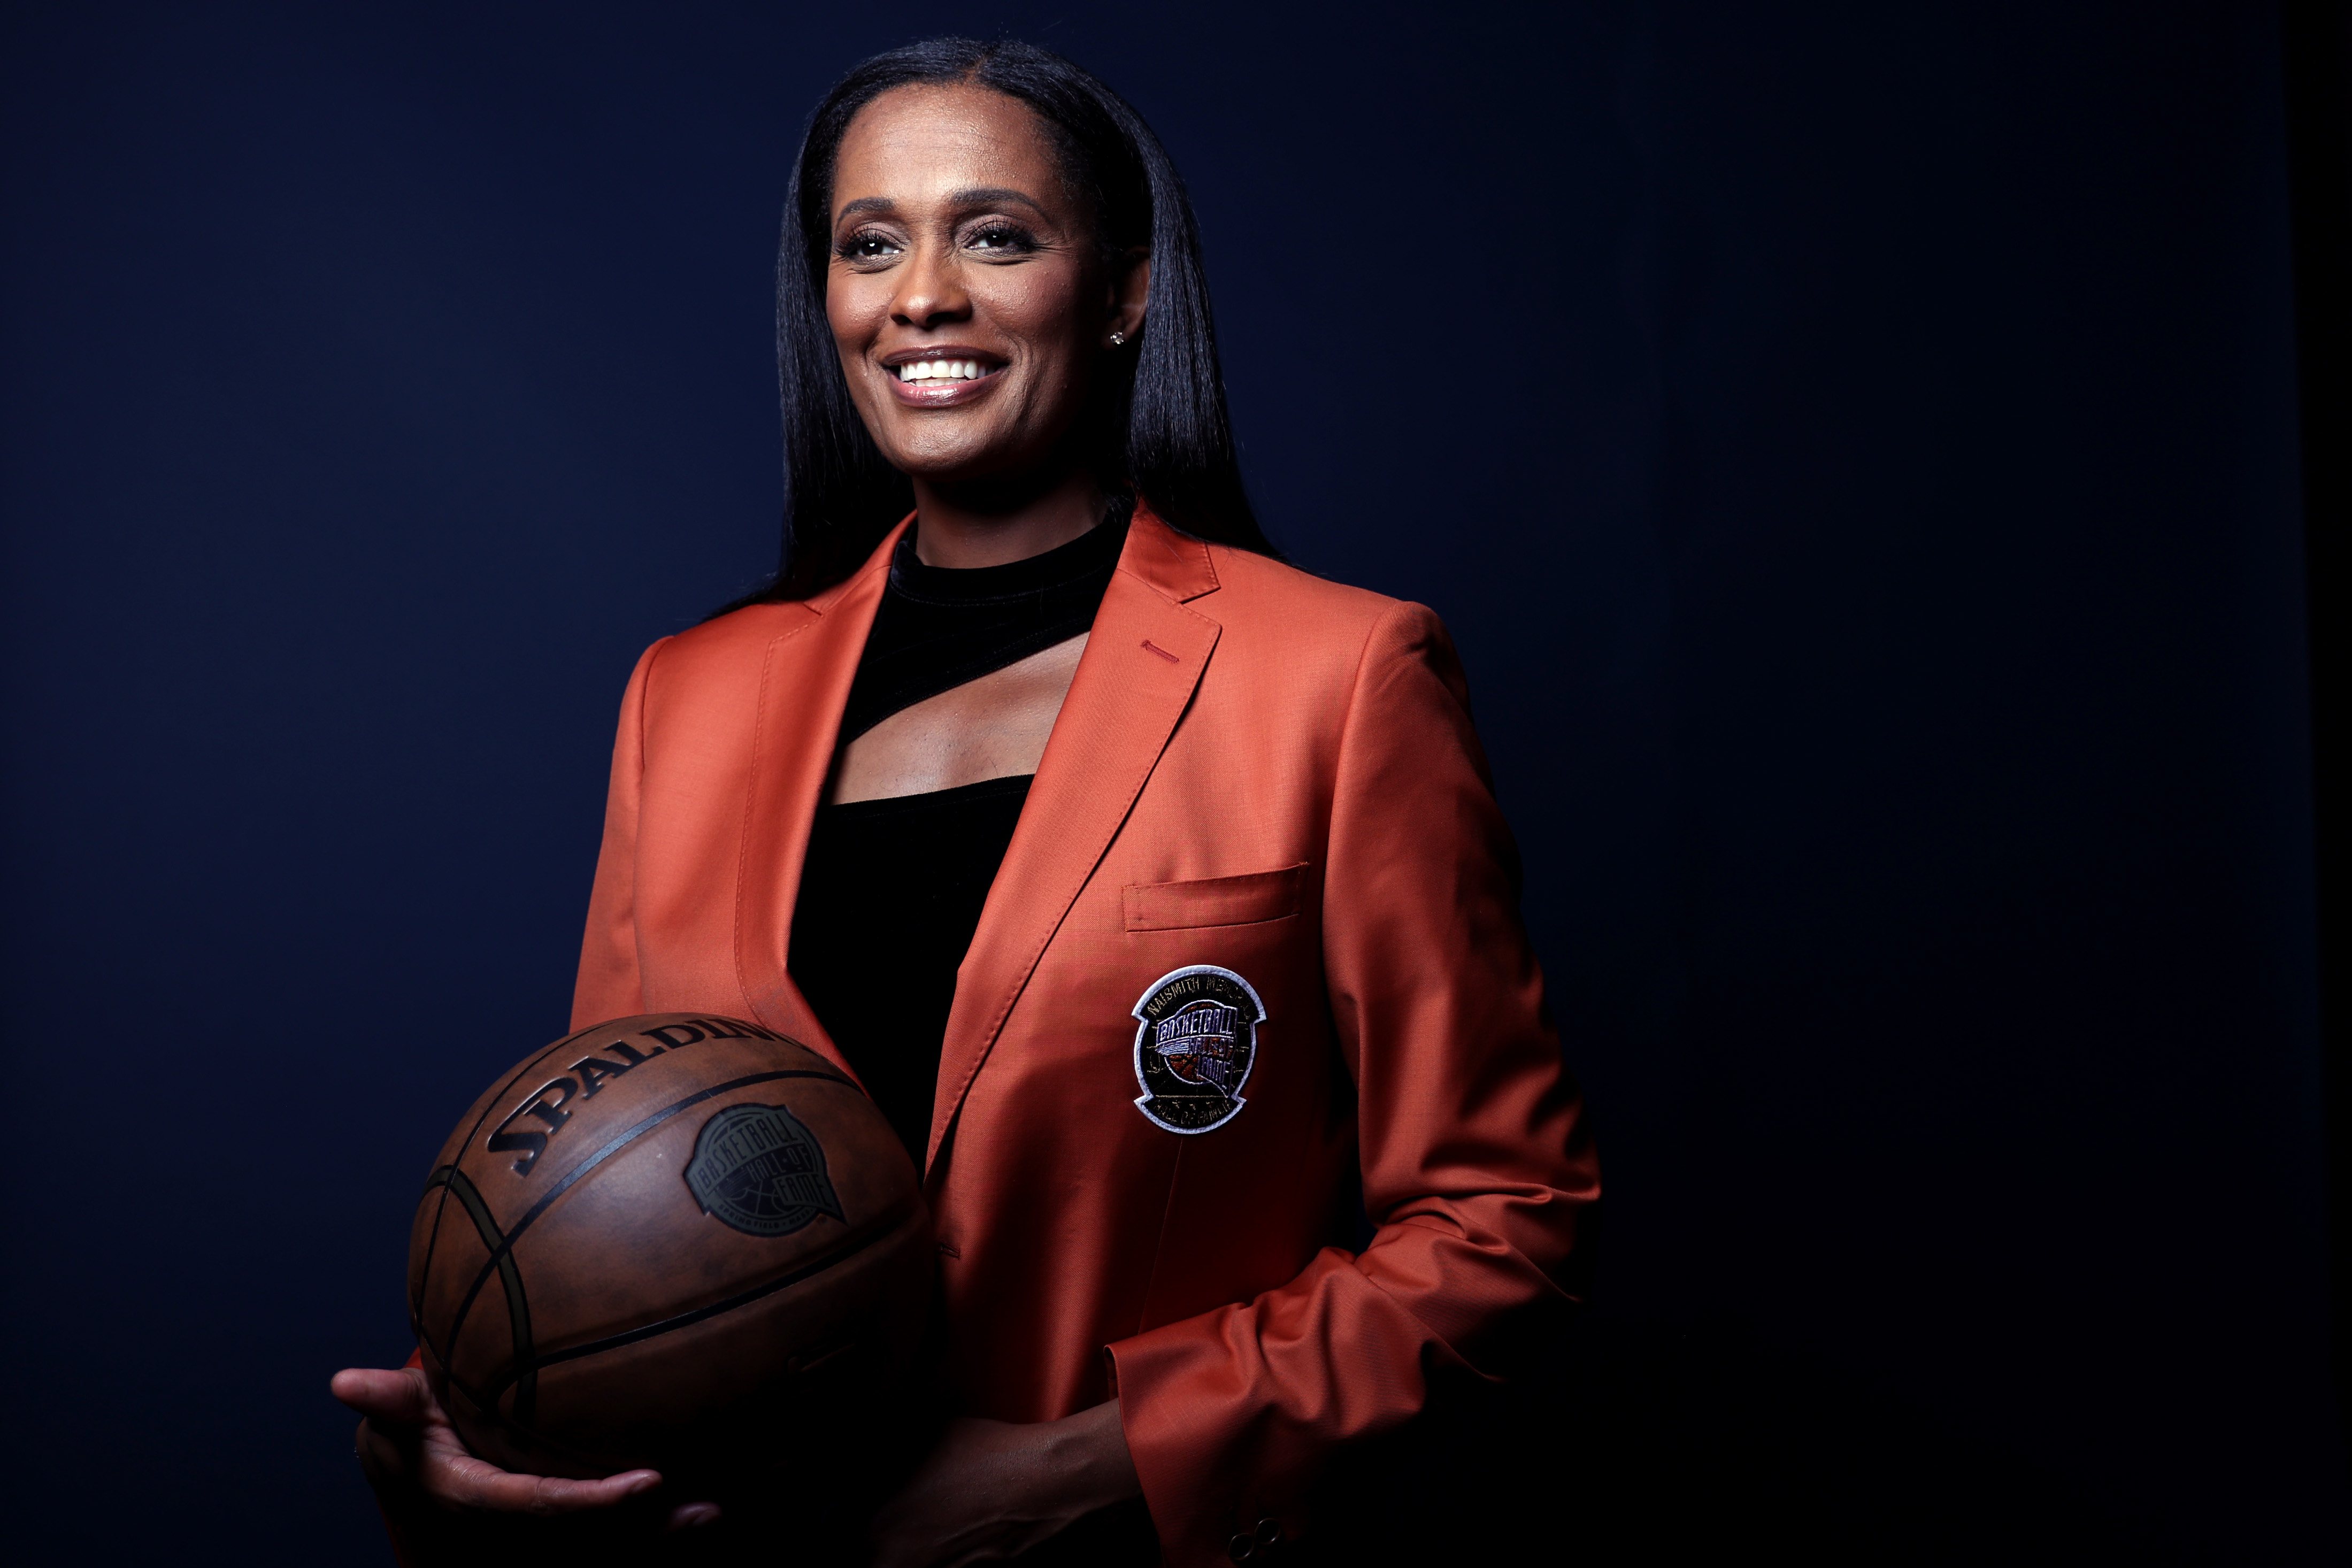 2022 Basketball Hall of Fame Enshrinement - Portraits